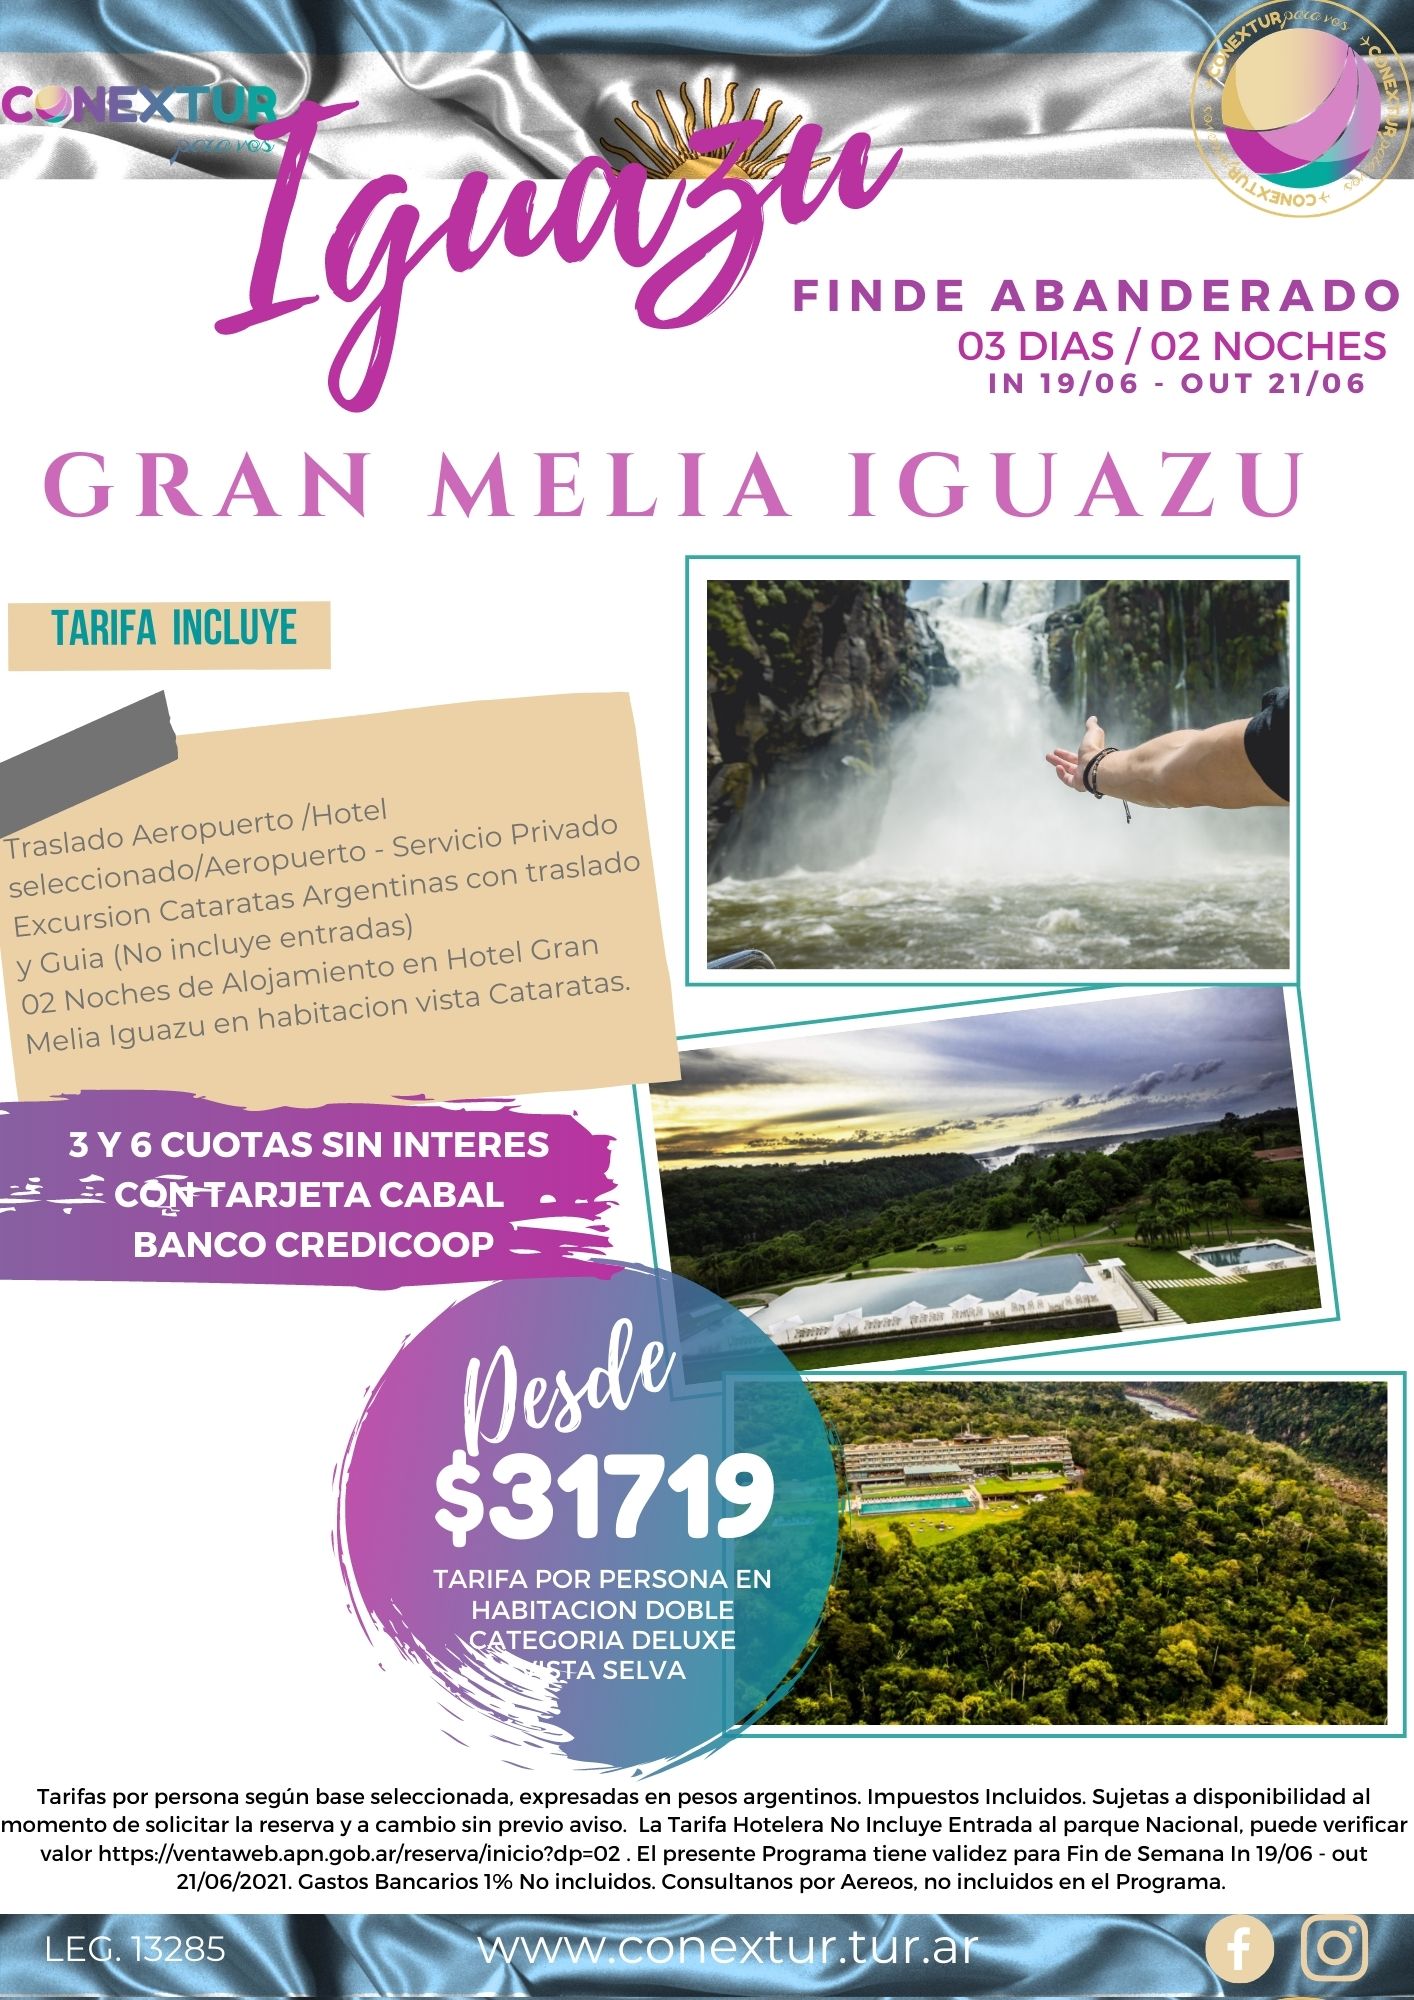 Hotel Gran Melia Iguazu - Iguazu - Promo Junio